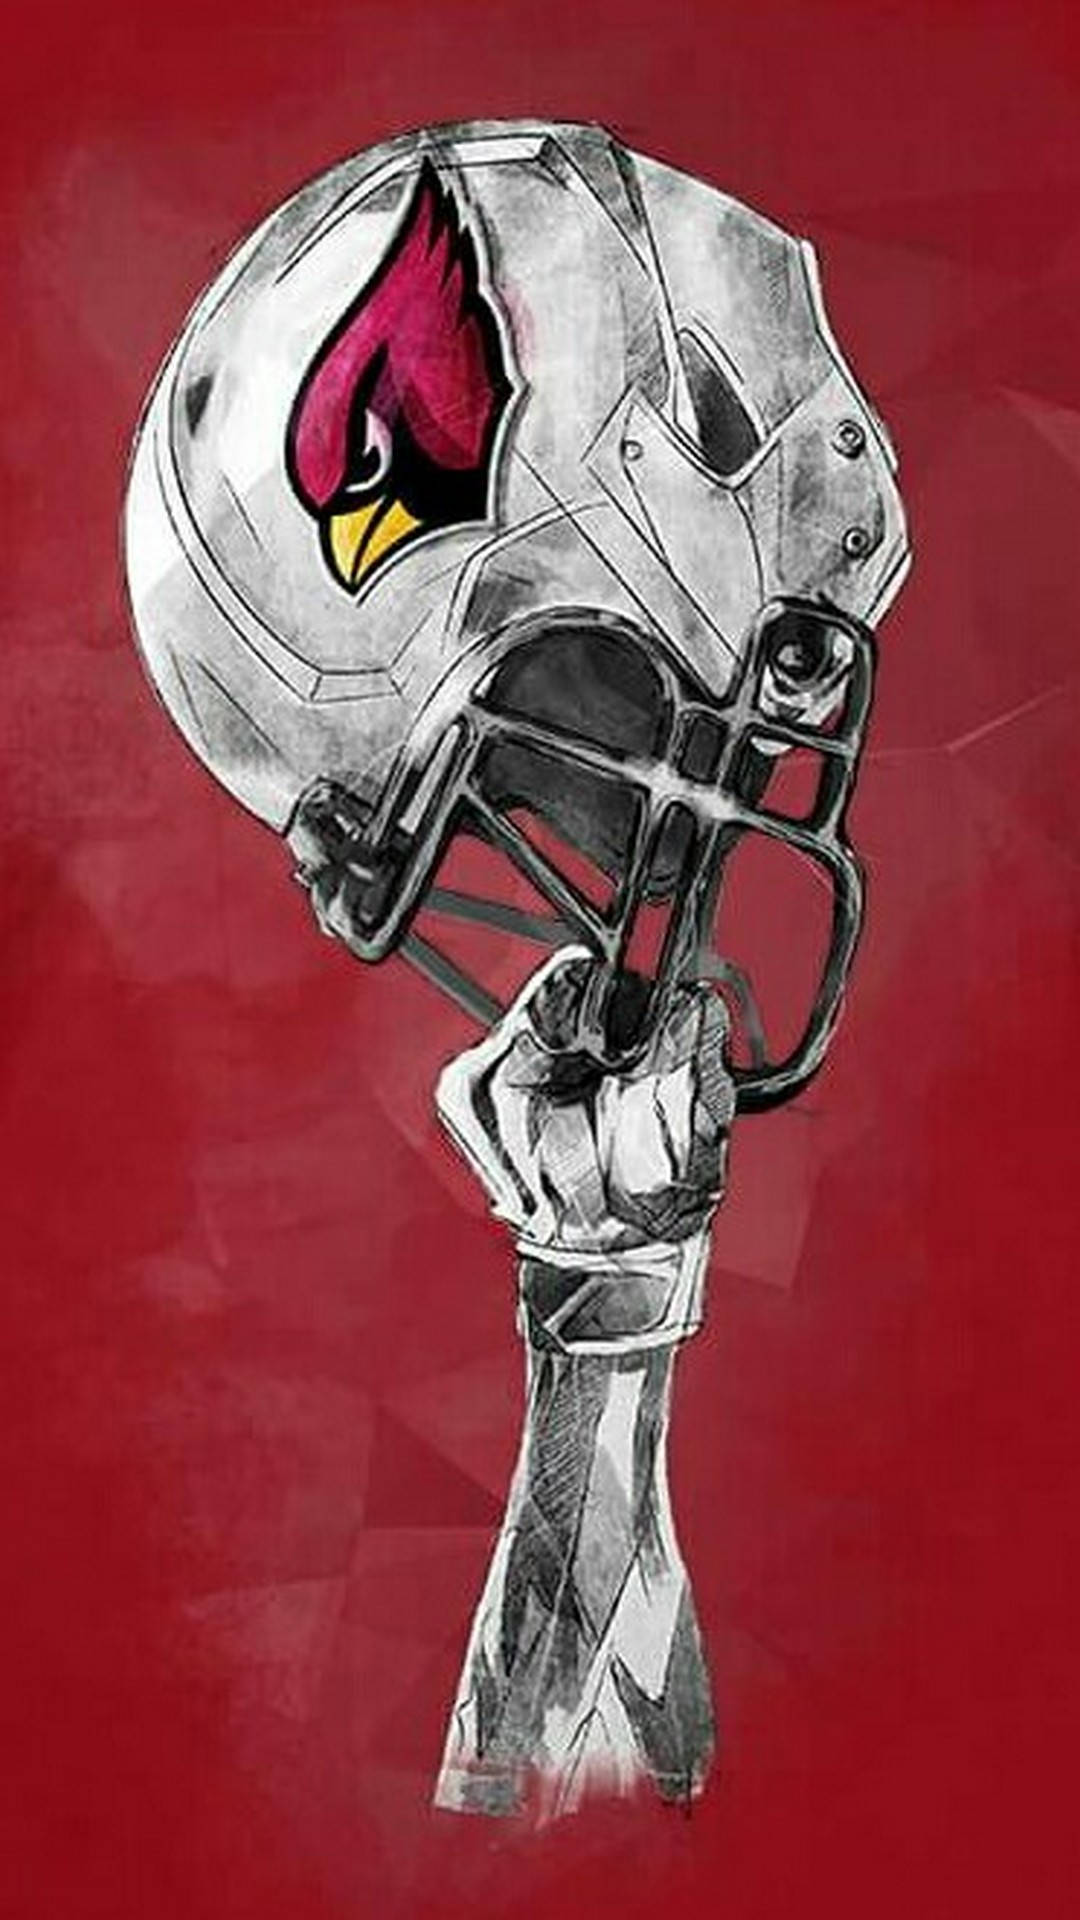 Arizona Cardinals Football Helmet Wallpaper